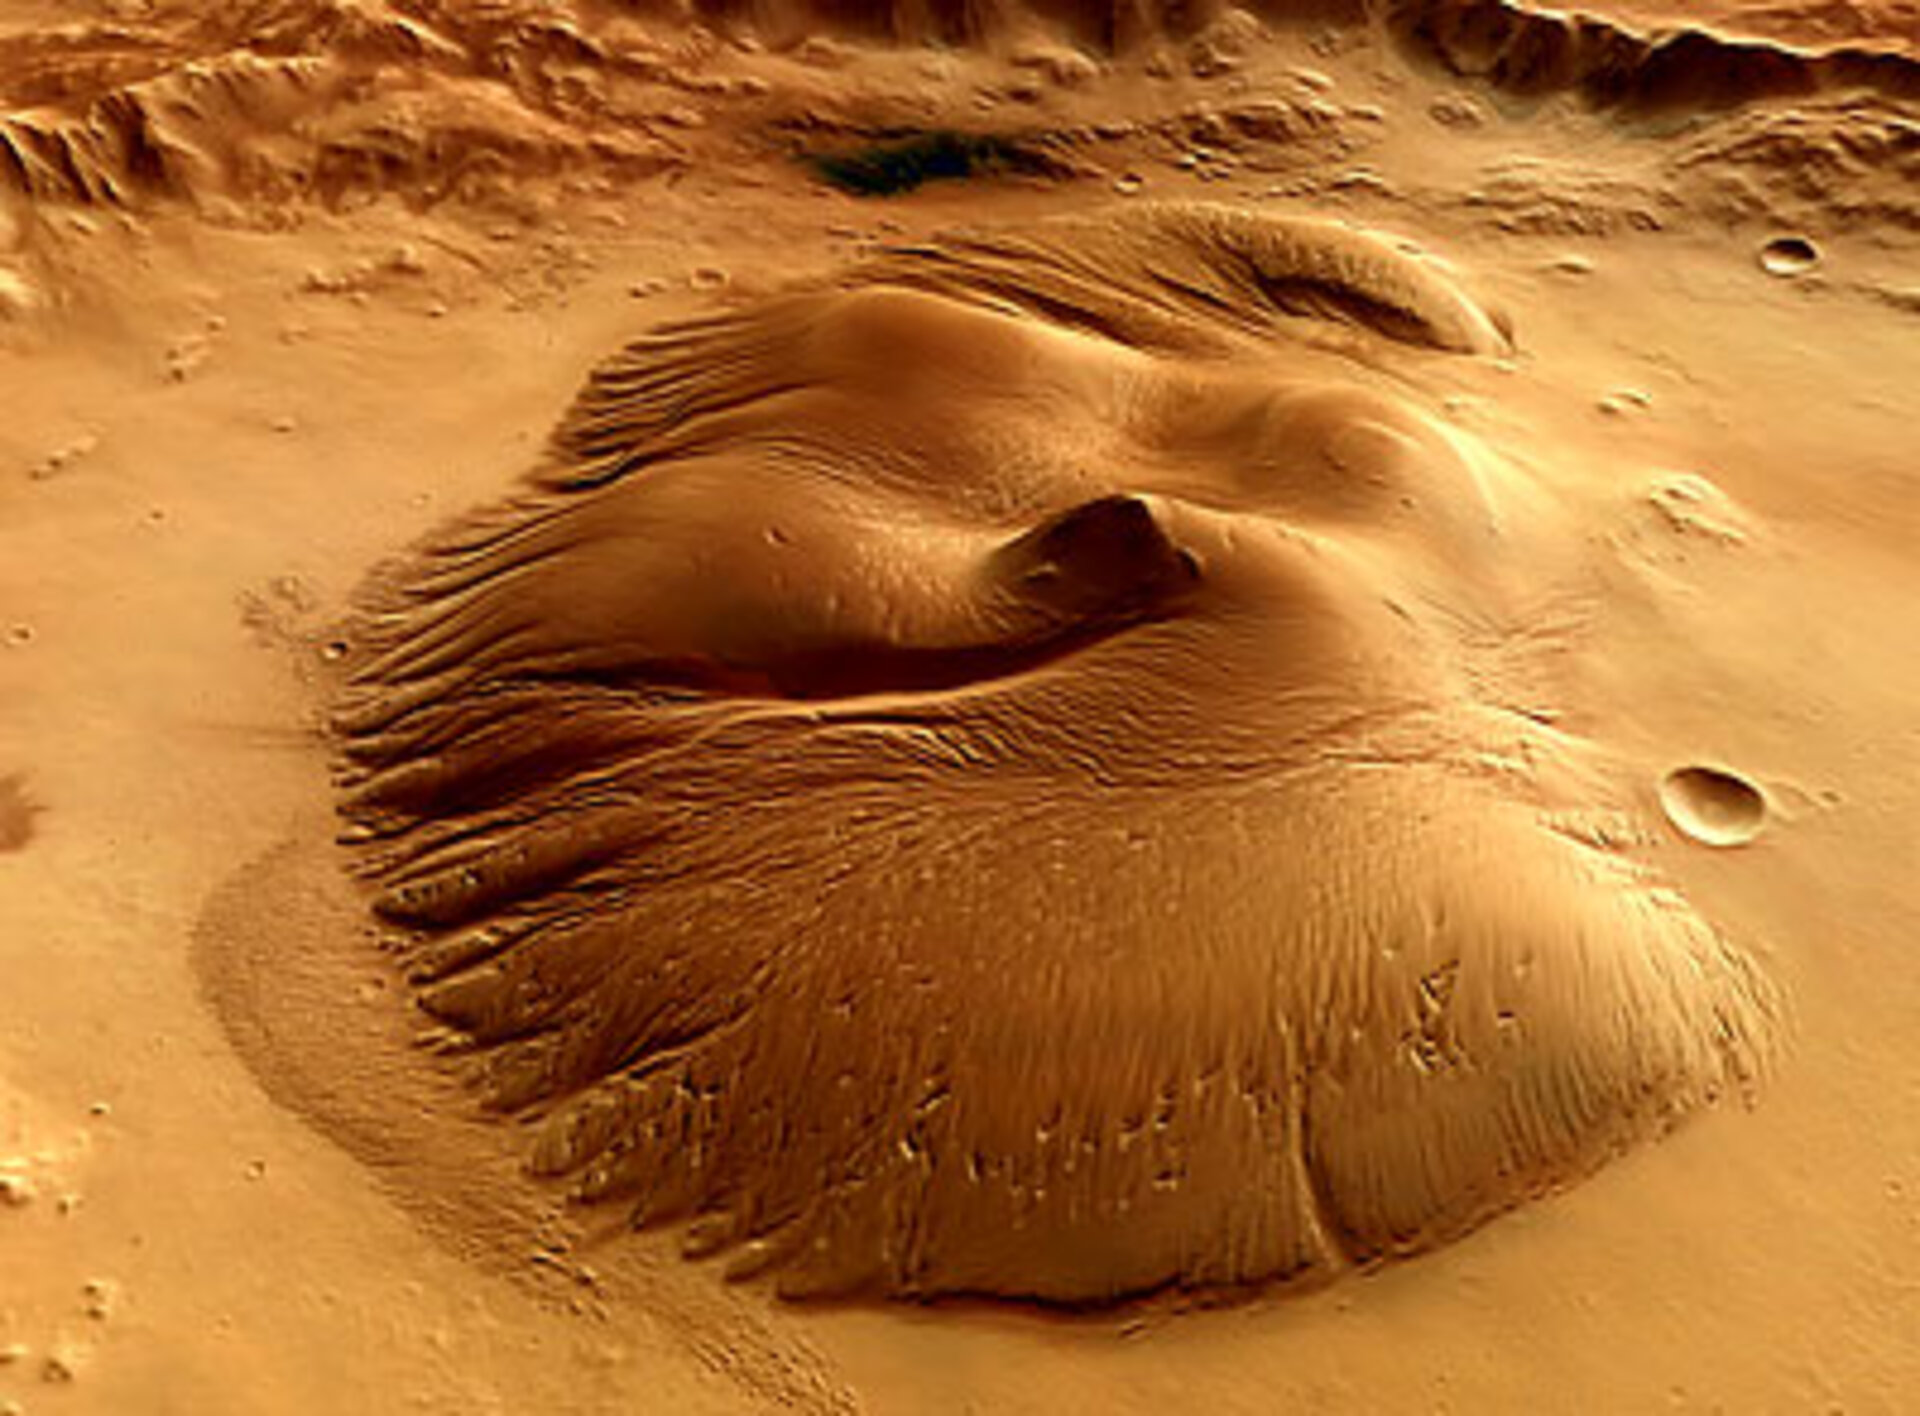 Mars landscape